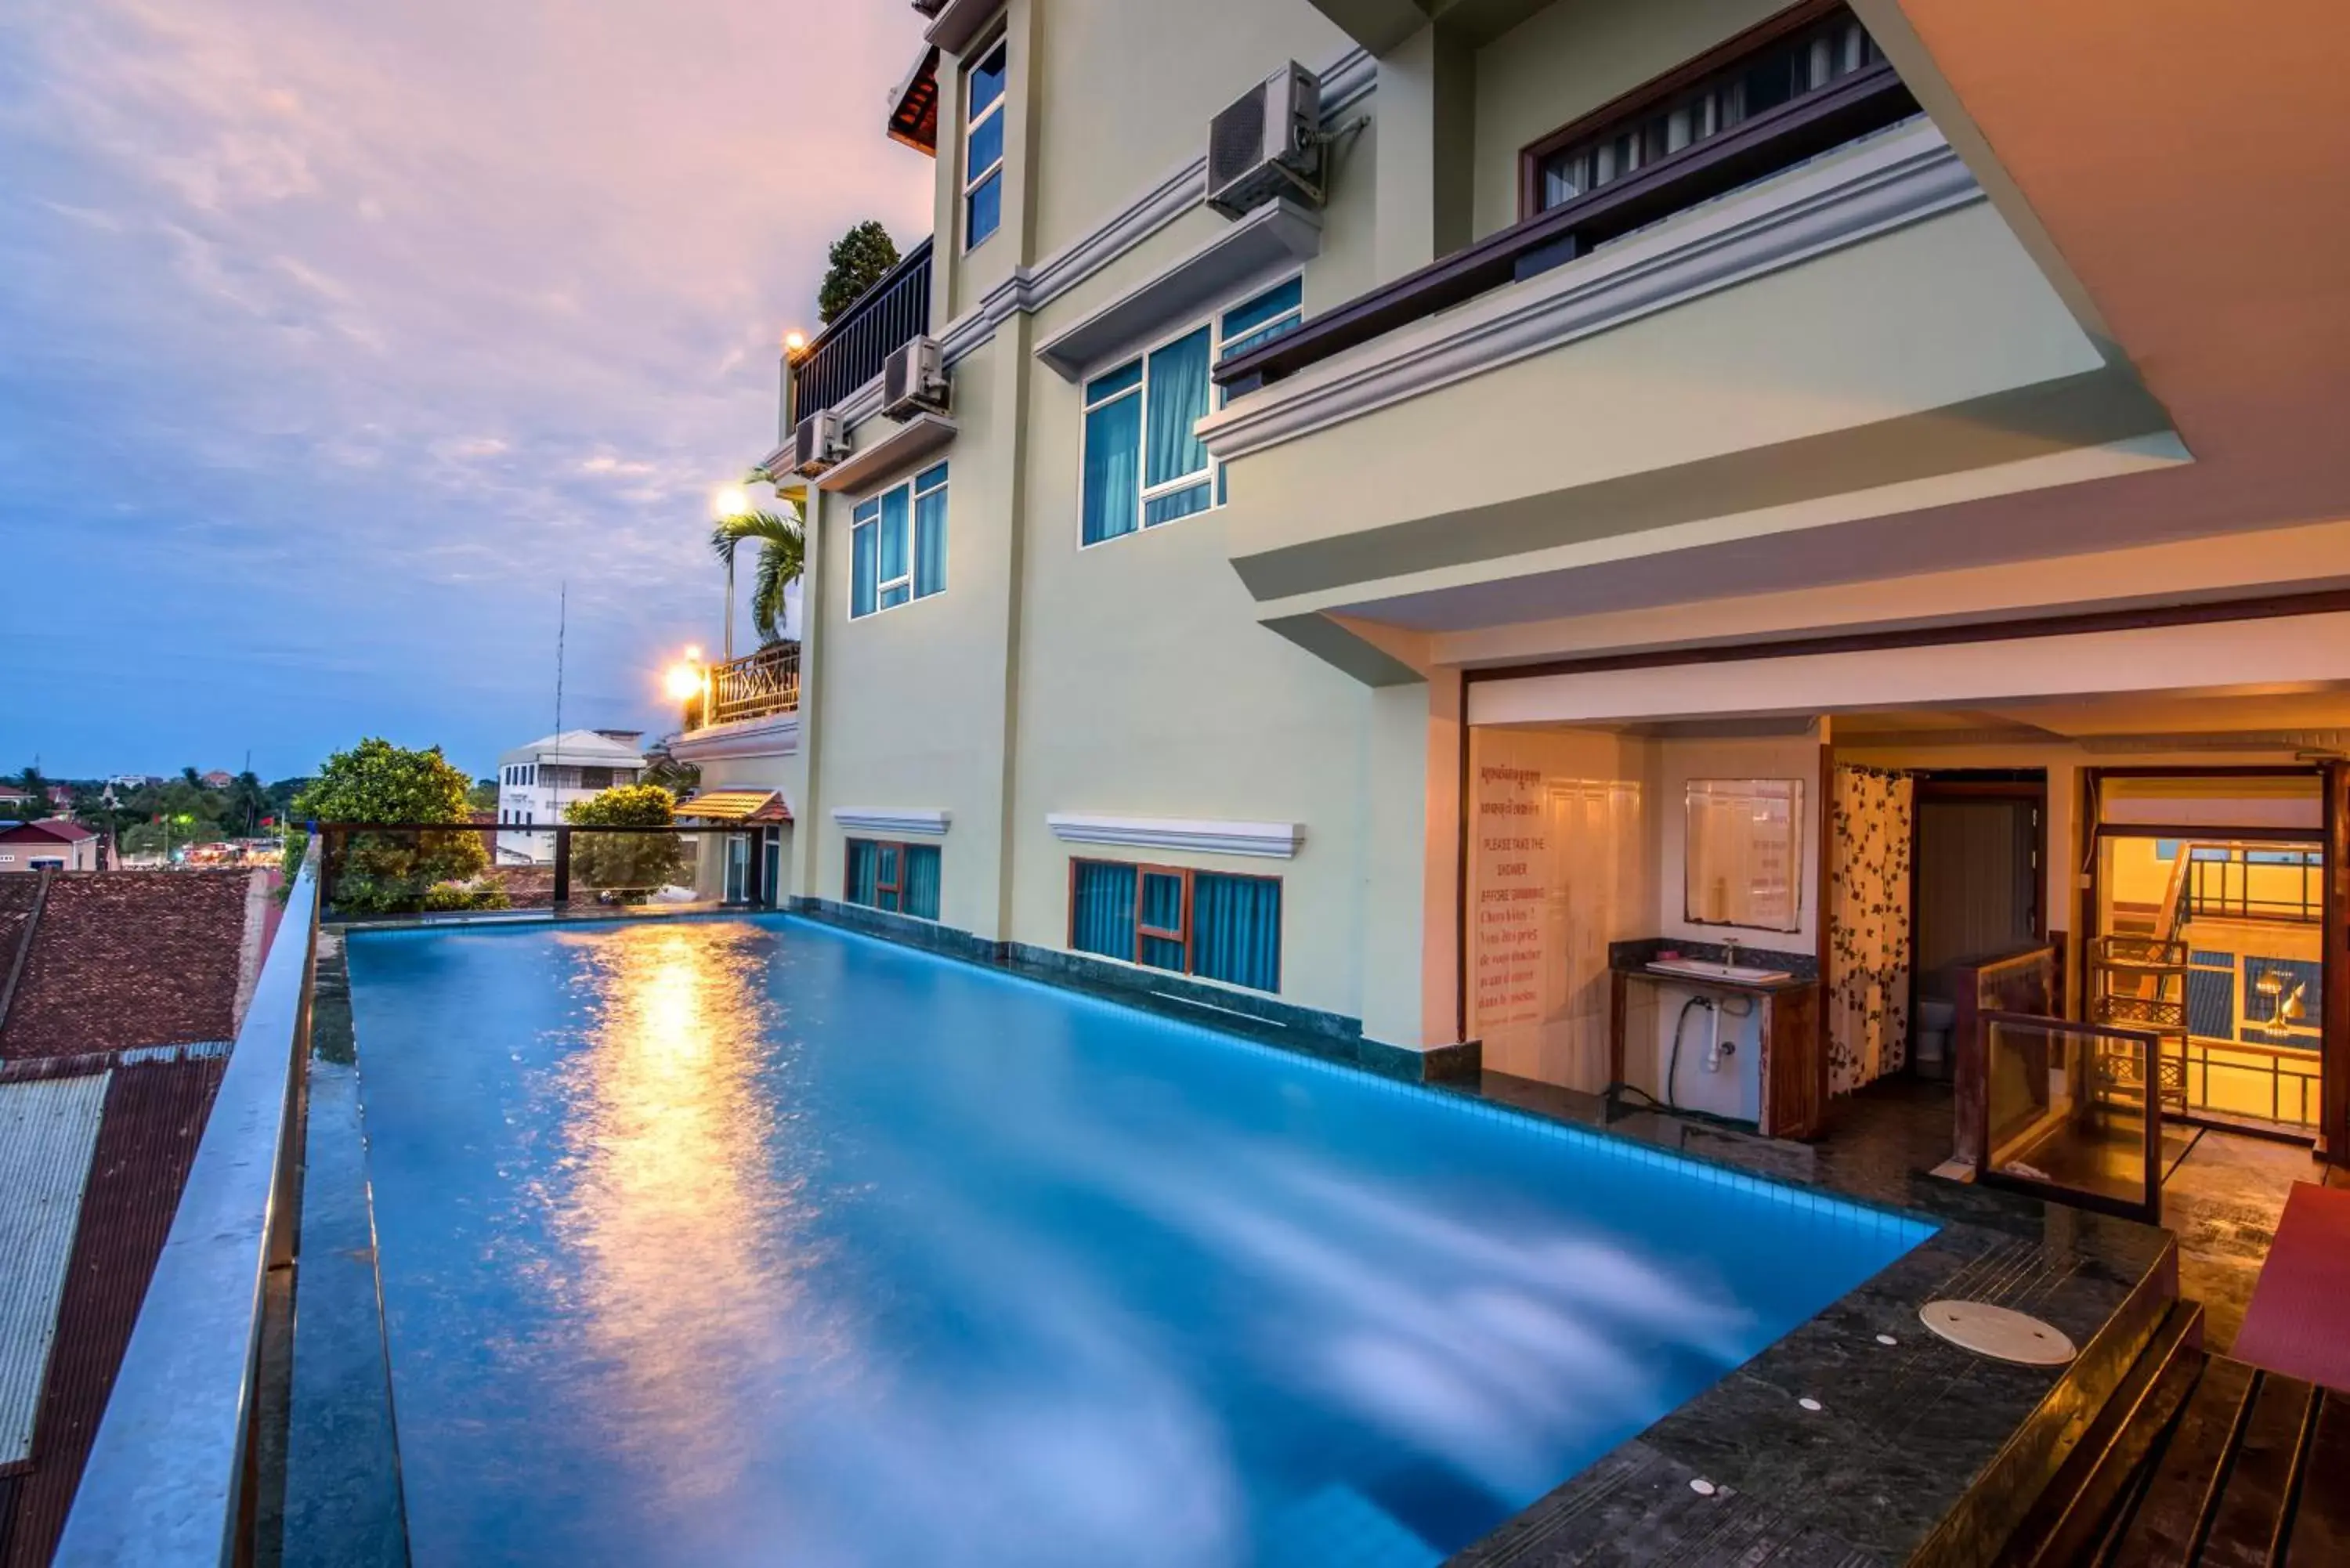 Swimming pool in Seng Hout Hotel